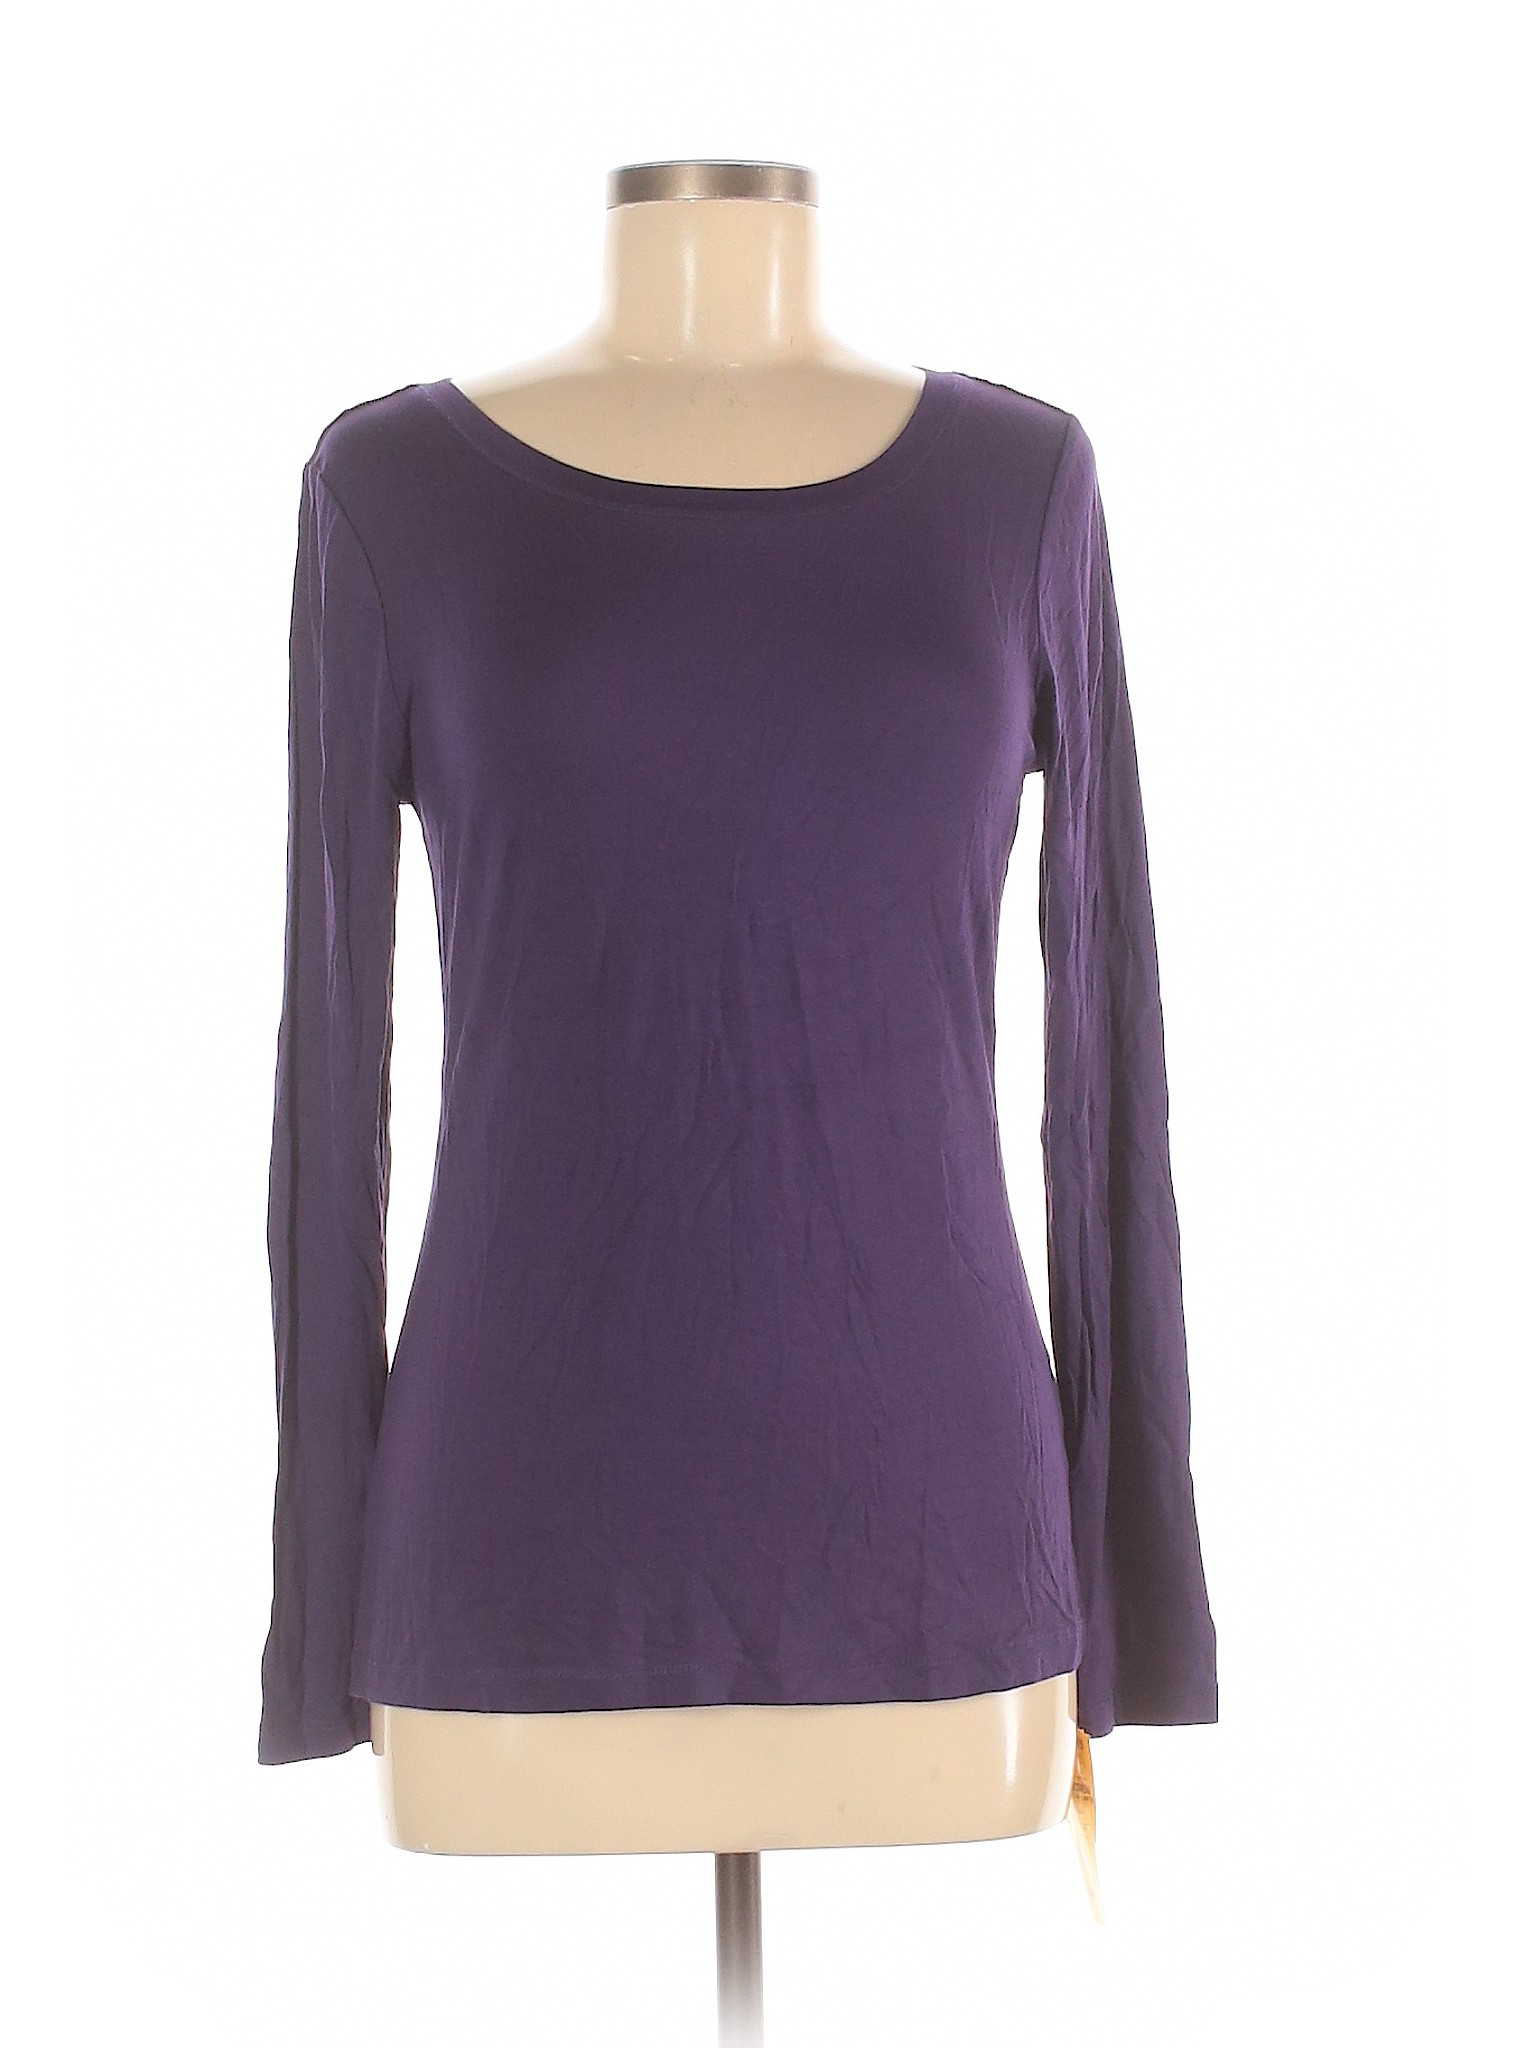 NWT Cupio Women Purple Long Sleeve T-Shirt M | eBay